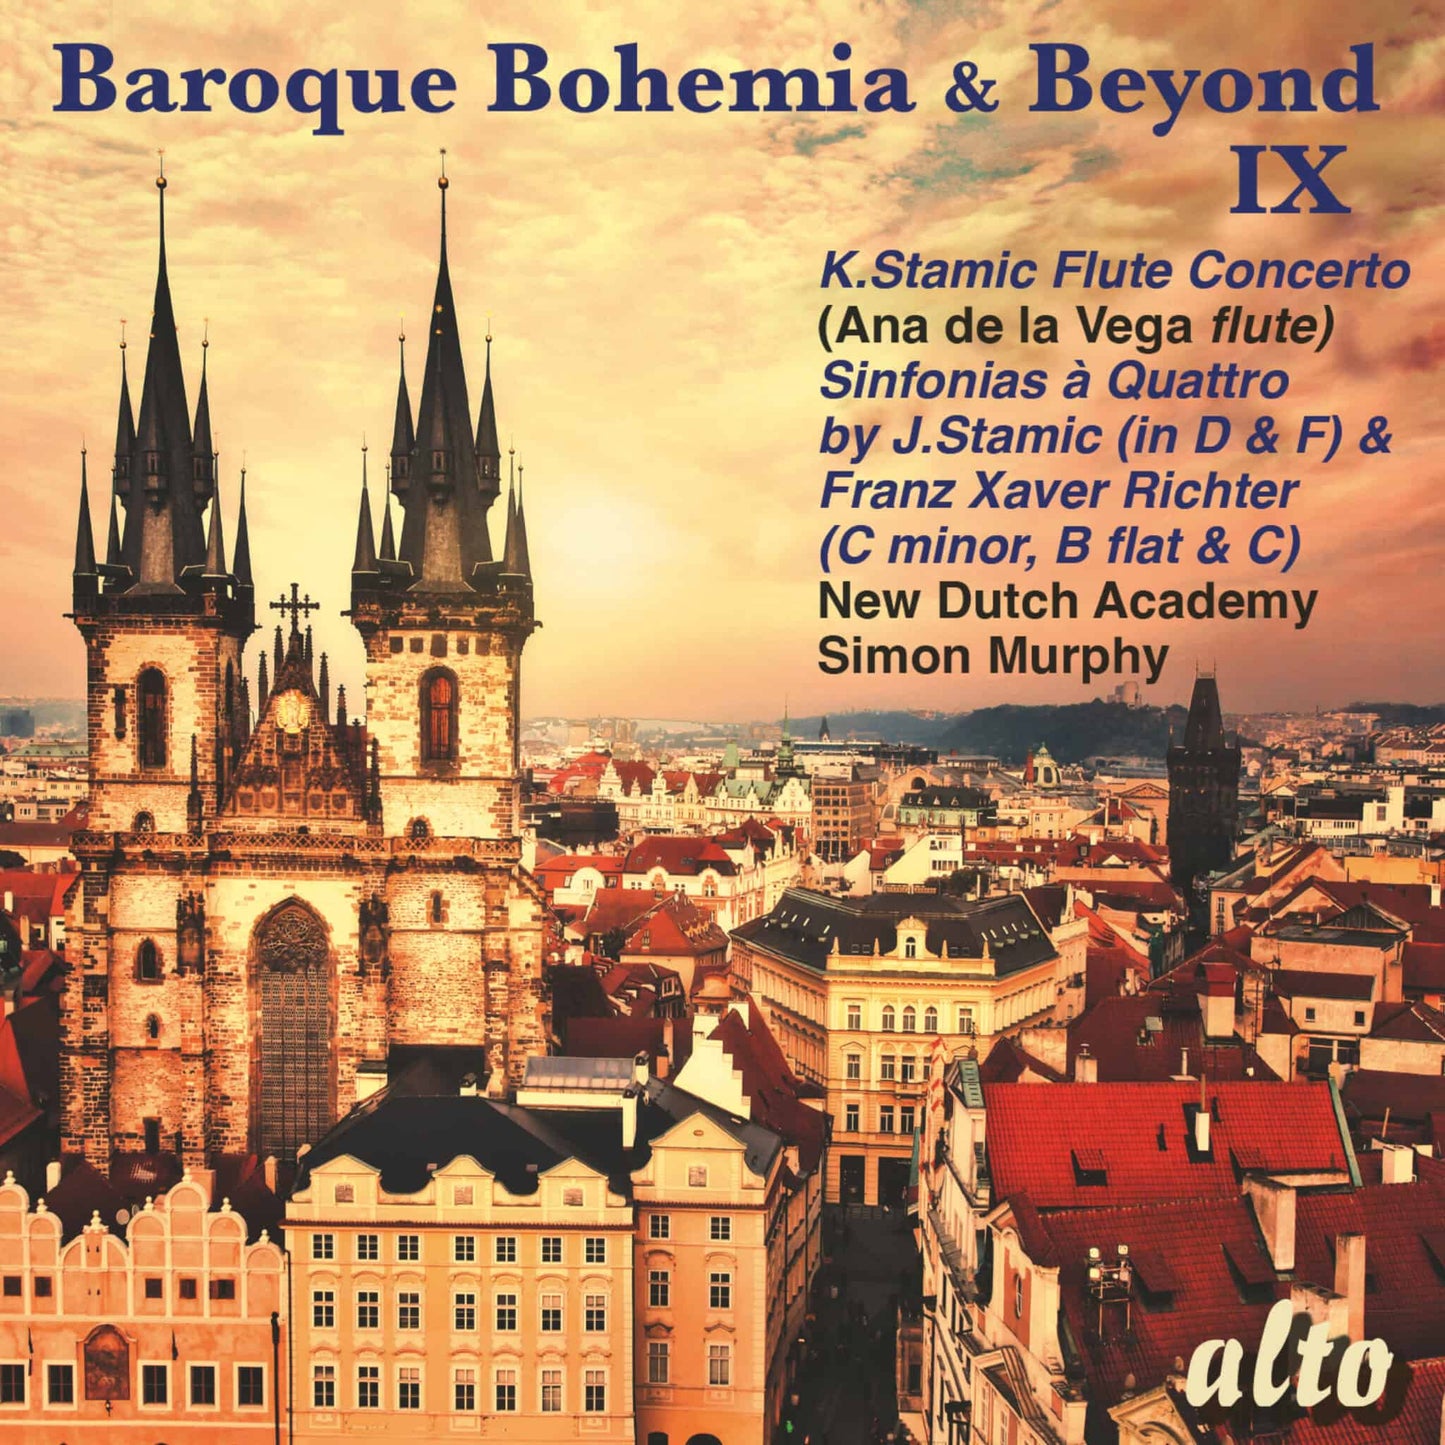 Baroque Bohemia & Beyond, Volume IX -Ana de la Vega, Trondheim Soloists, New Dutch Academy, Simon Murphy (CD + FREE MP3)